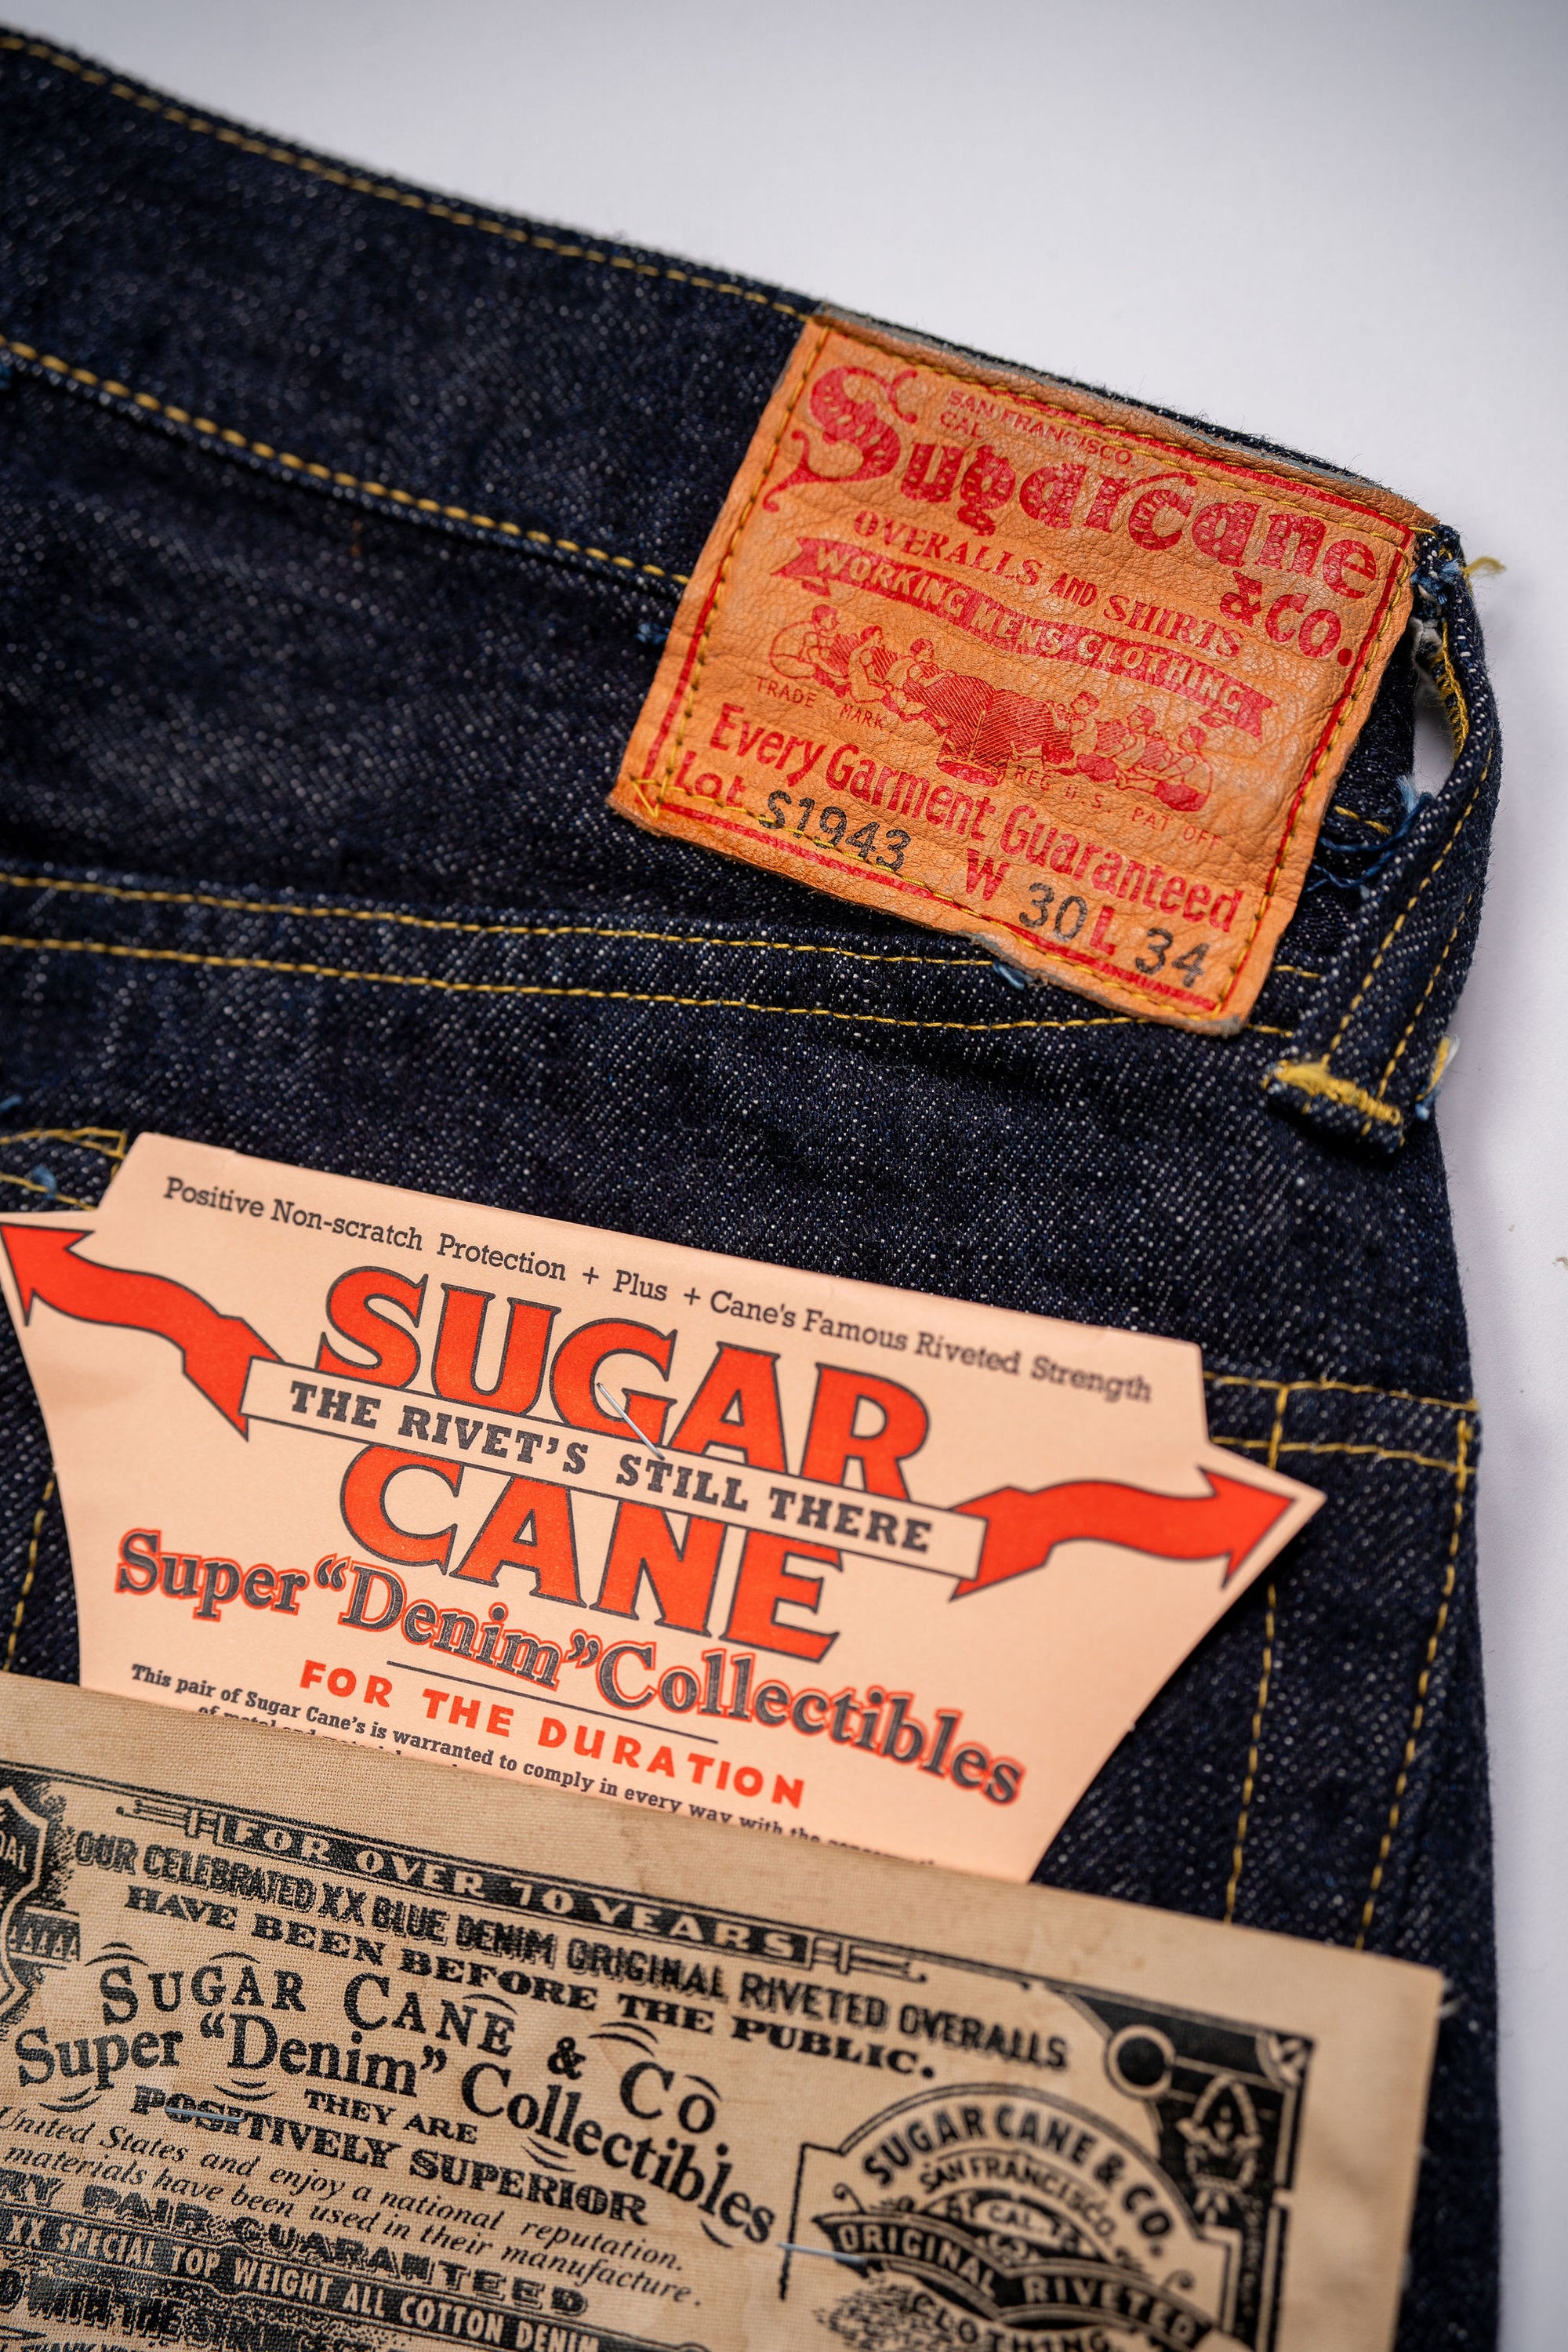 Sugar Cane 1943 Model - Super "Denim" Collectibles #09 13.5oz Blue Denim